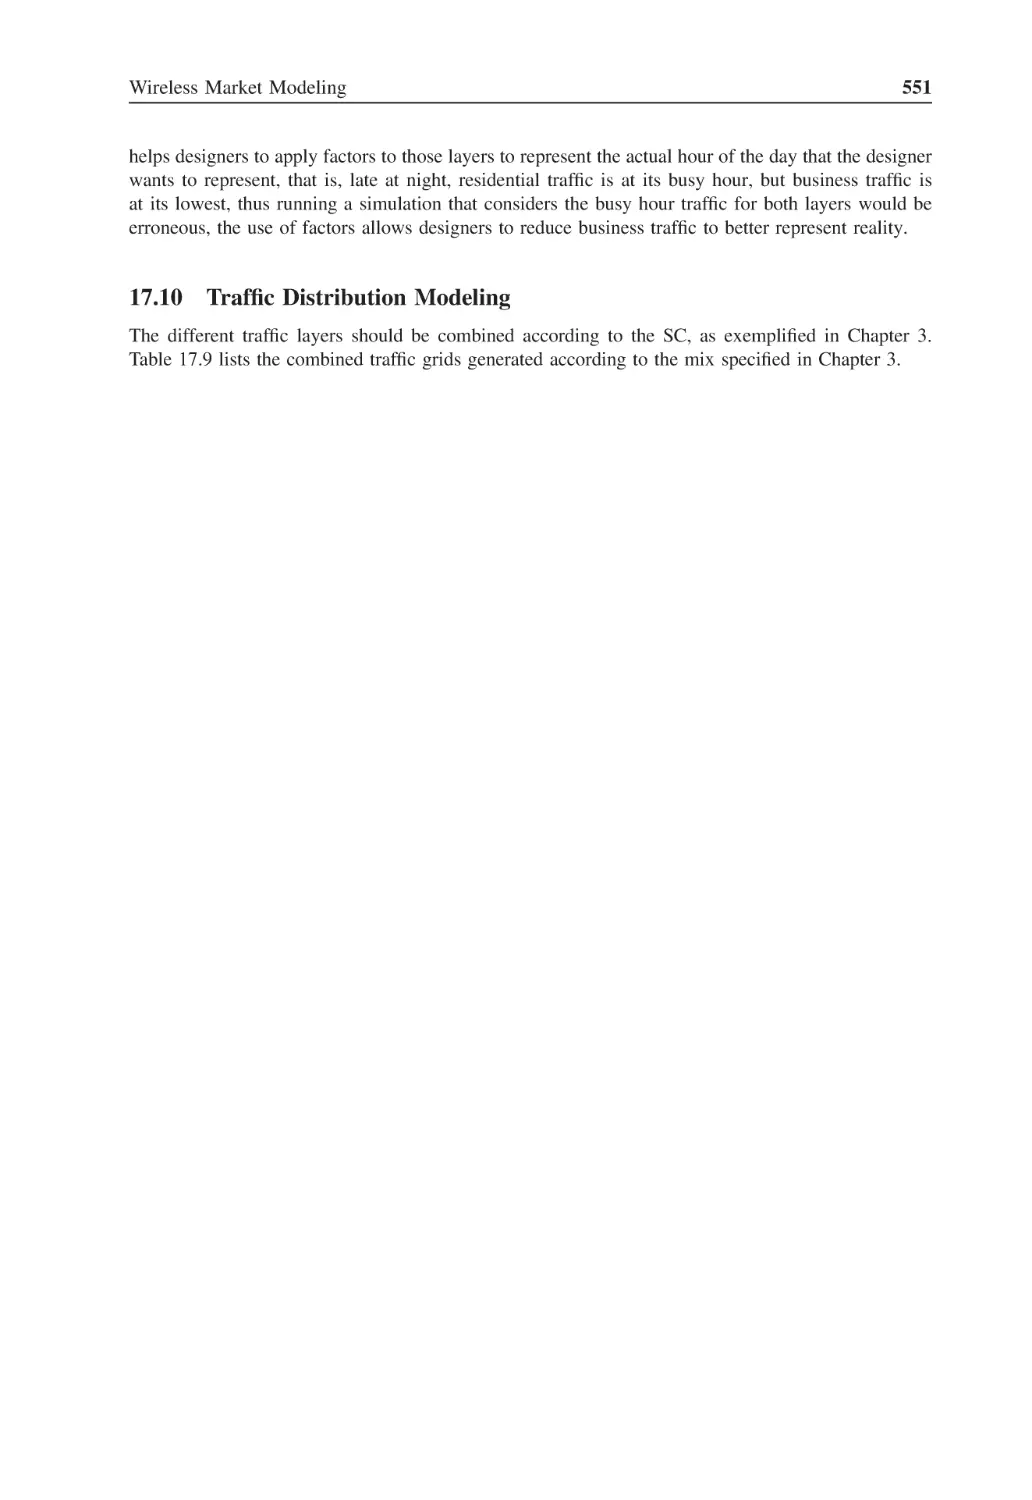 17.10 Traffic Distribution Modeling